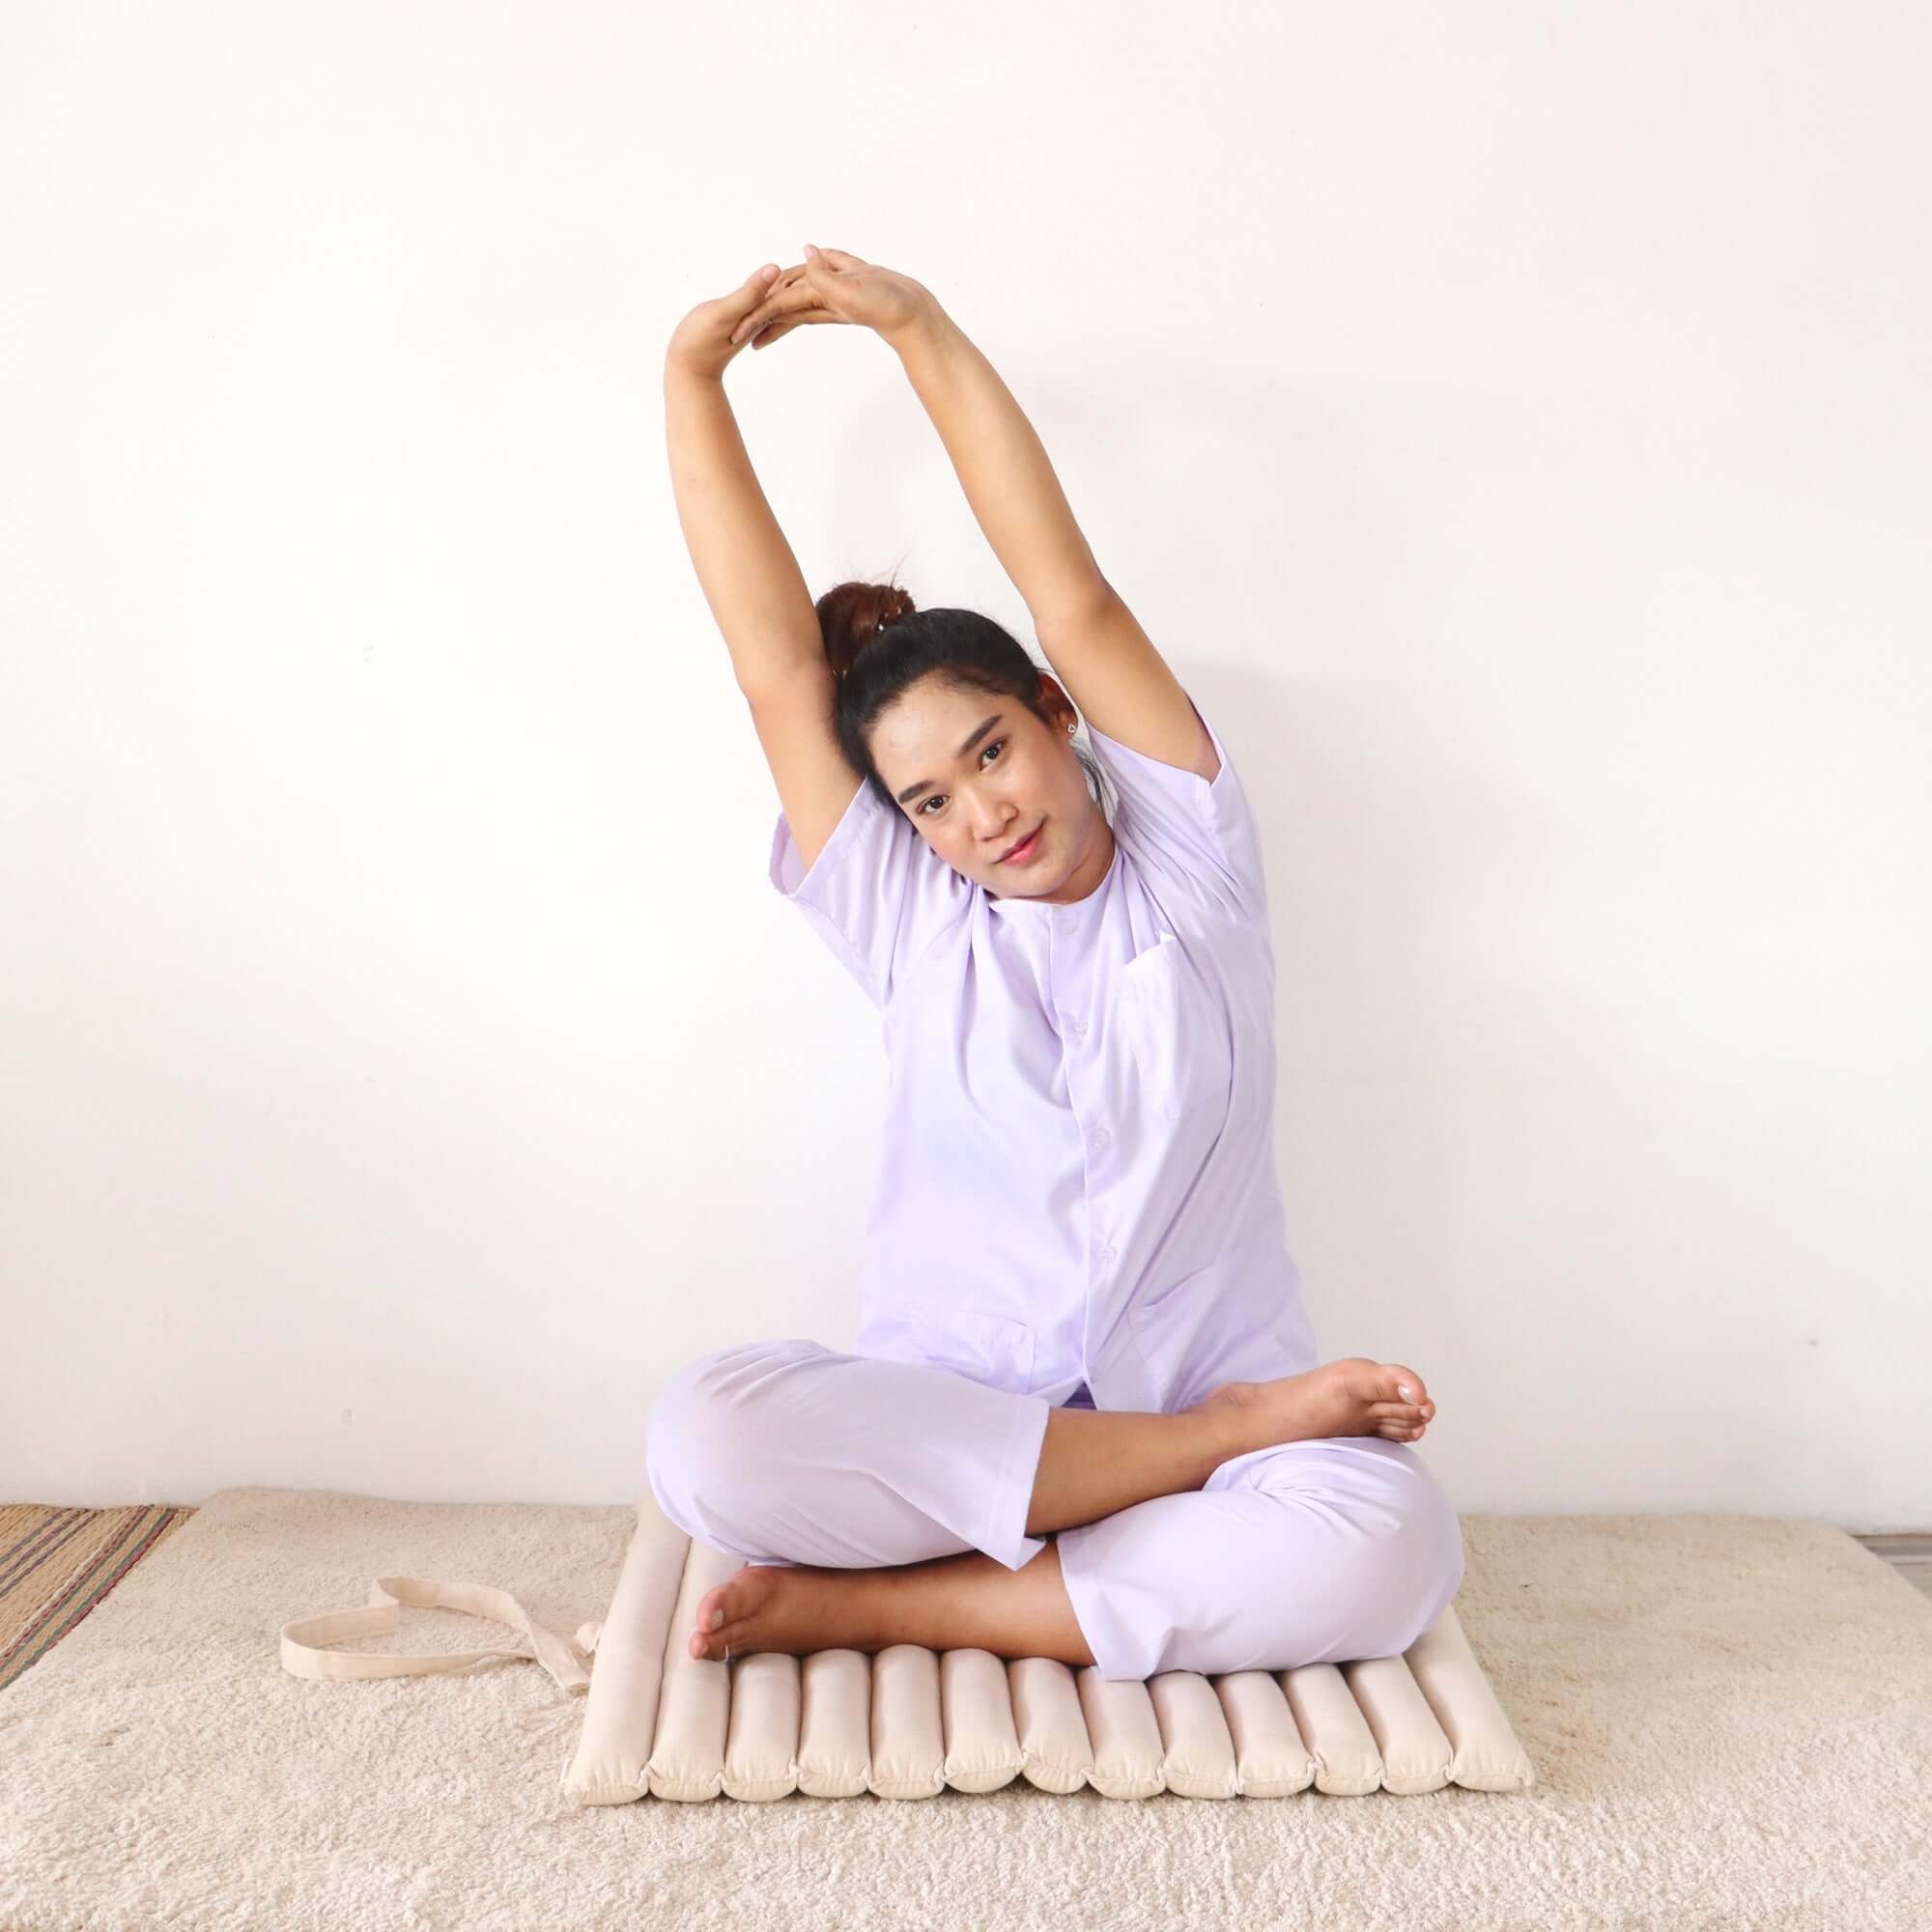 Meditation und Yoga